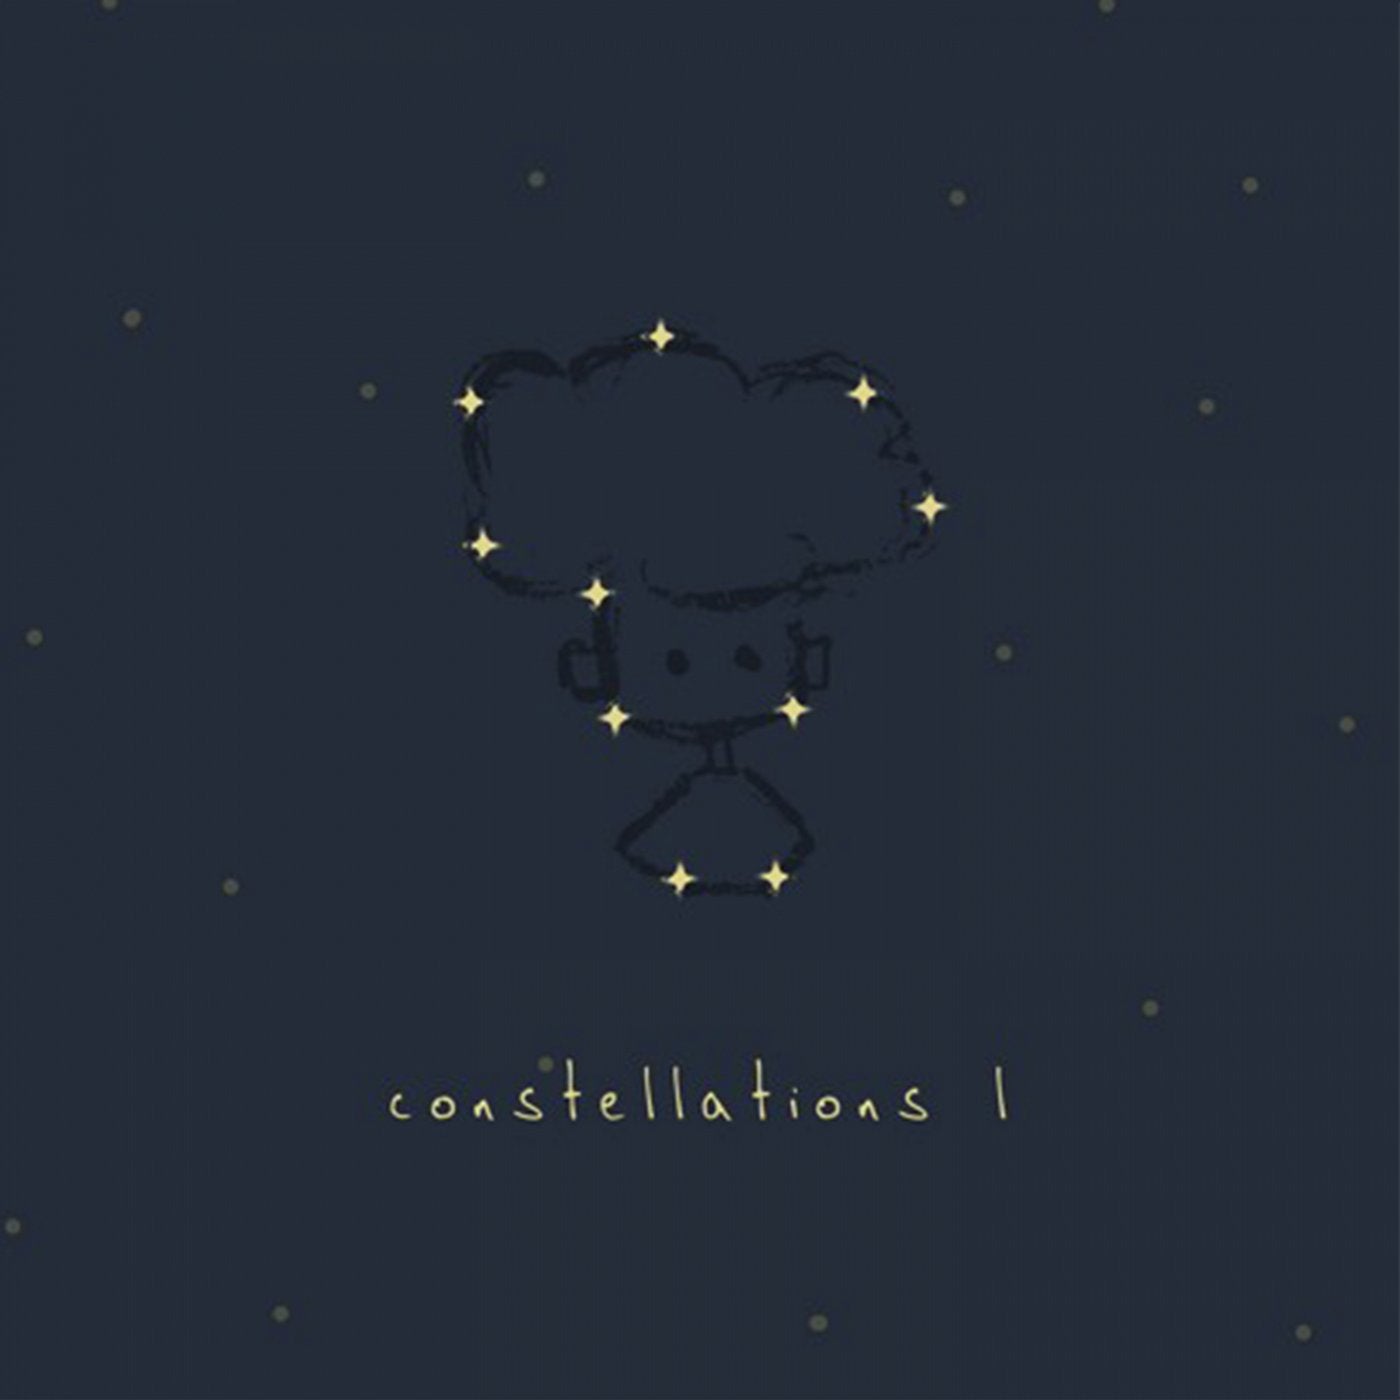 Constellations I